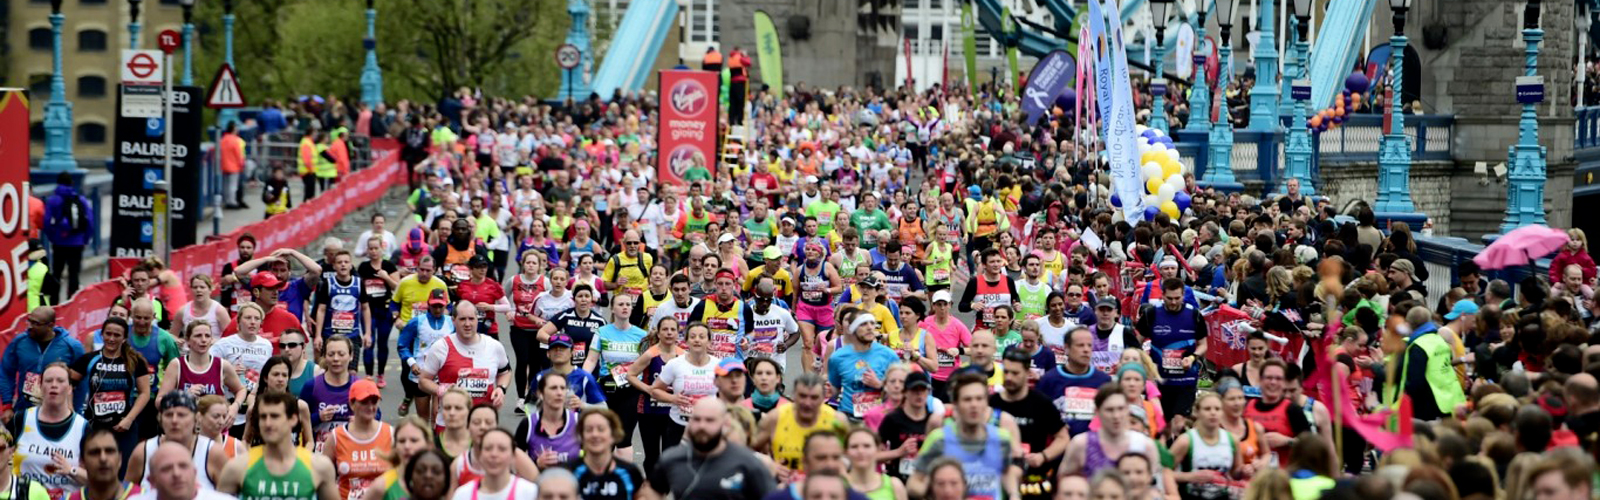 Huge crowd of runners racing across Tower Bridge